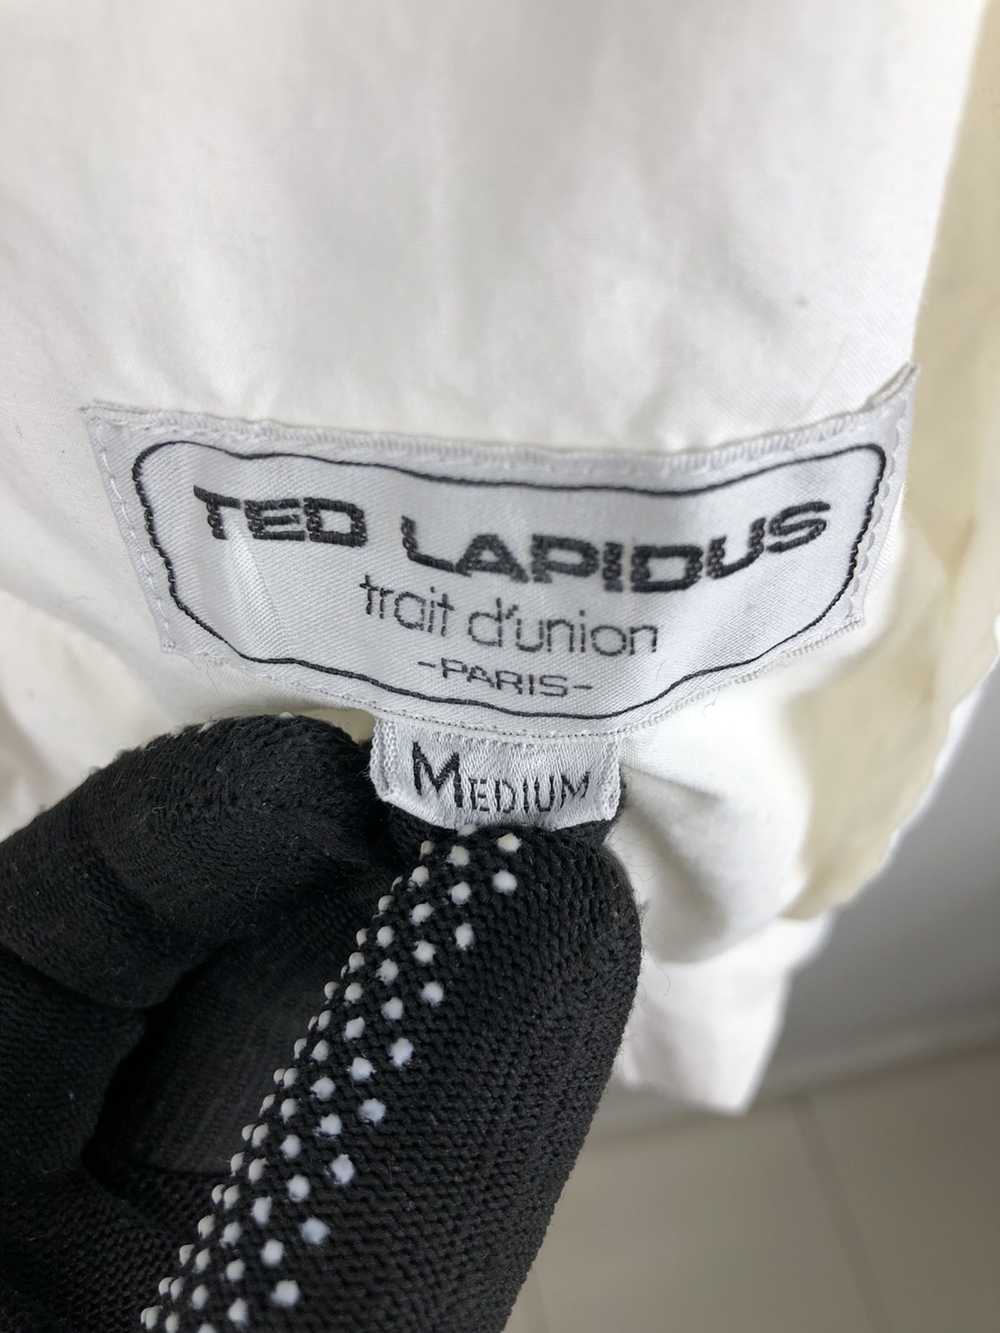 Ted Lapidus Vintage Ted Lapidus zipper Jacket - image 9